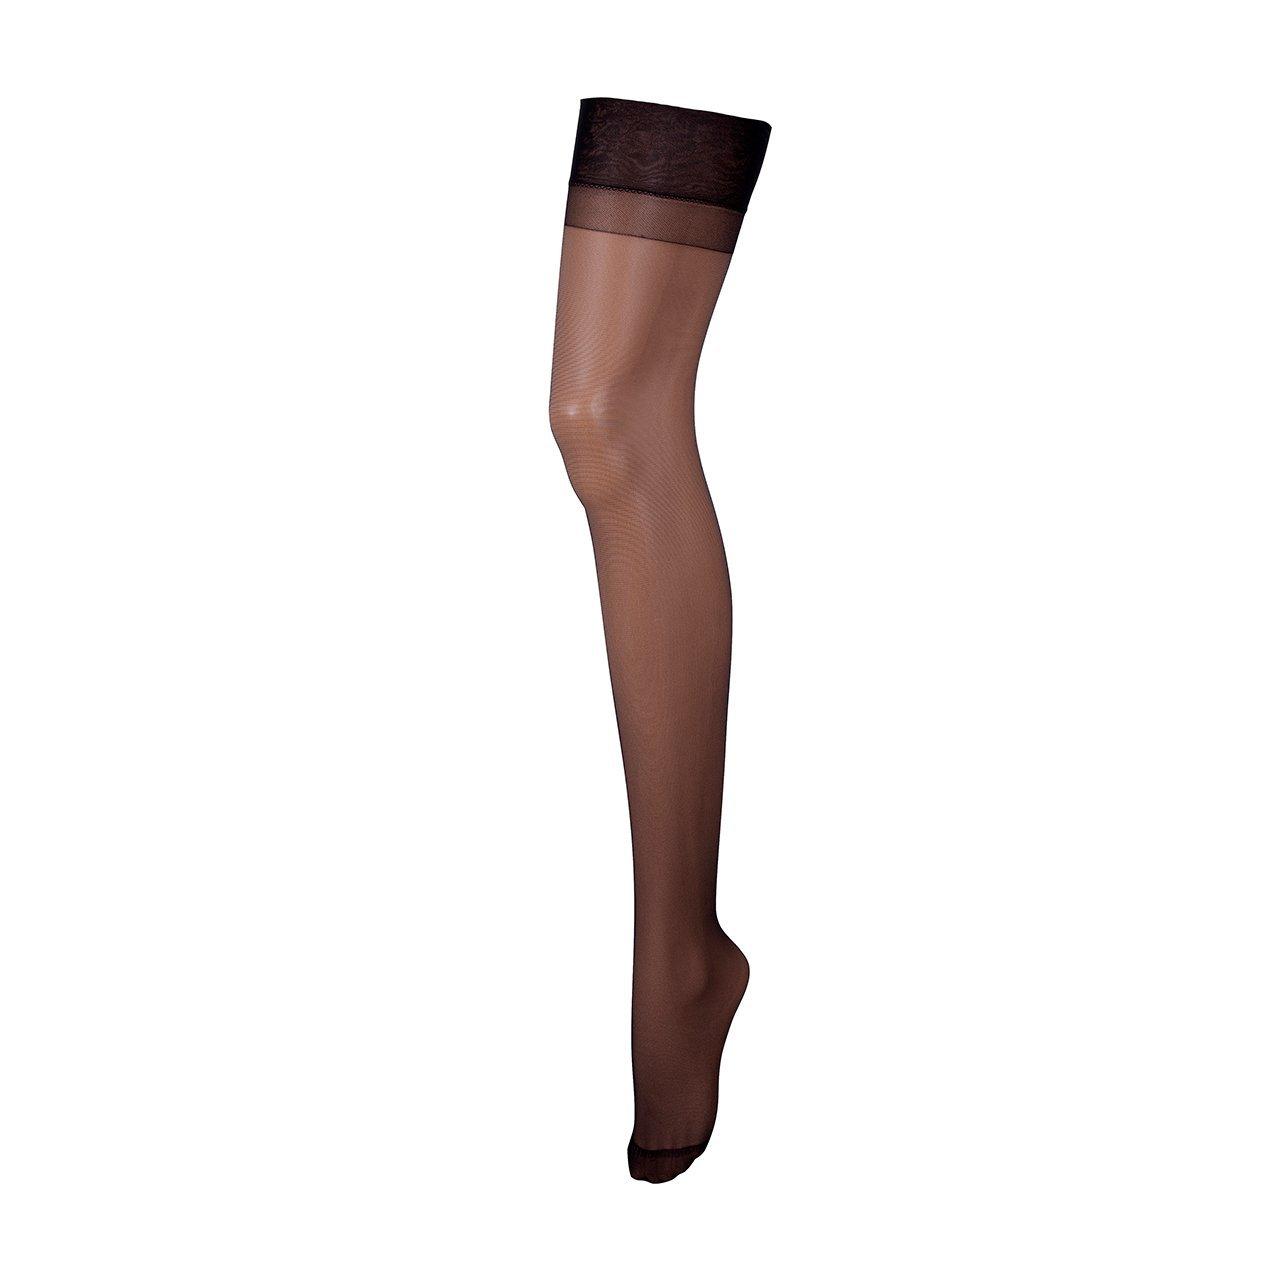 Bluebella Hosiery Stockings Plain Leg/Lace Top Black 